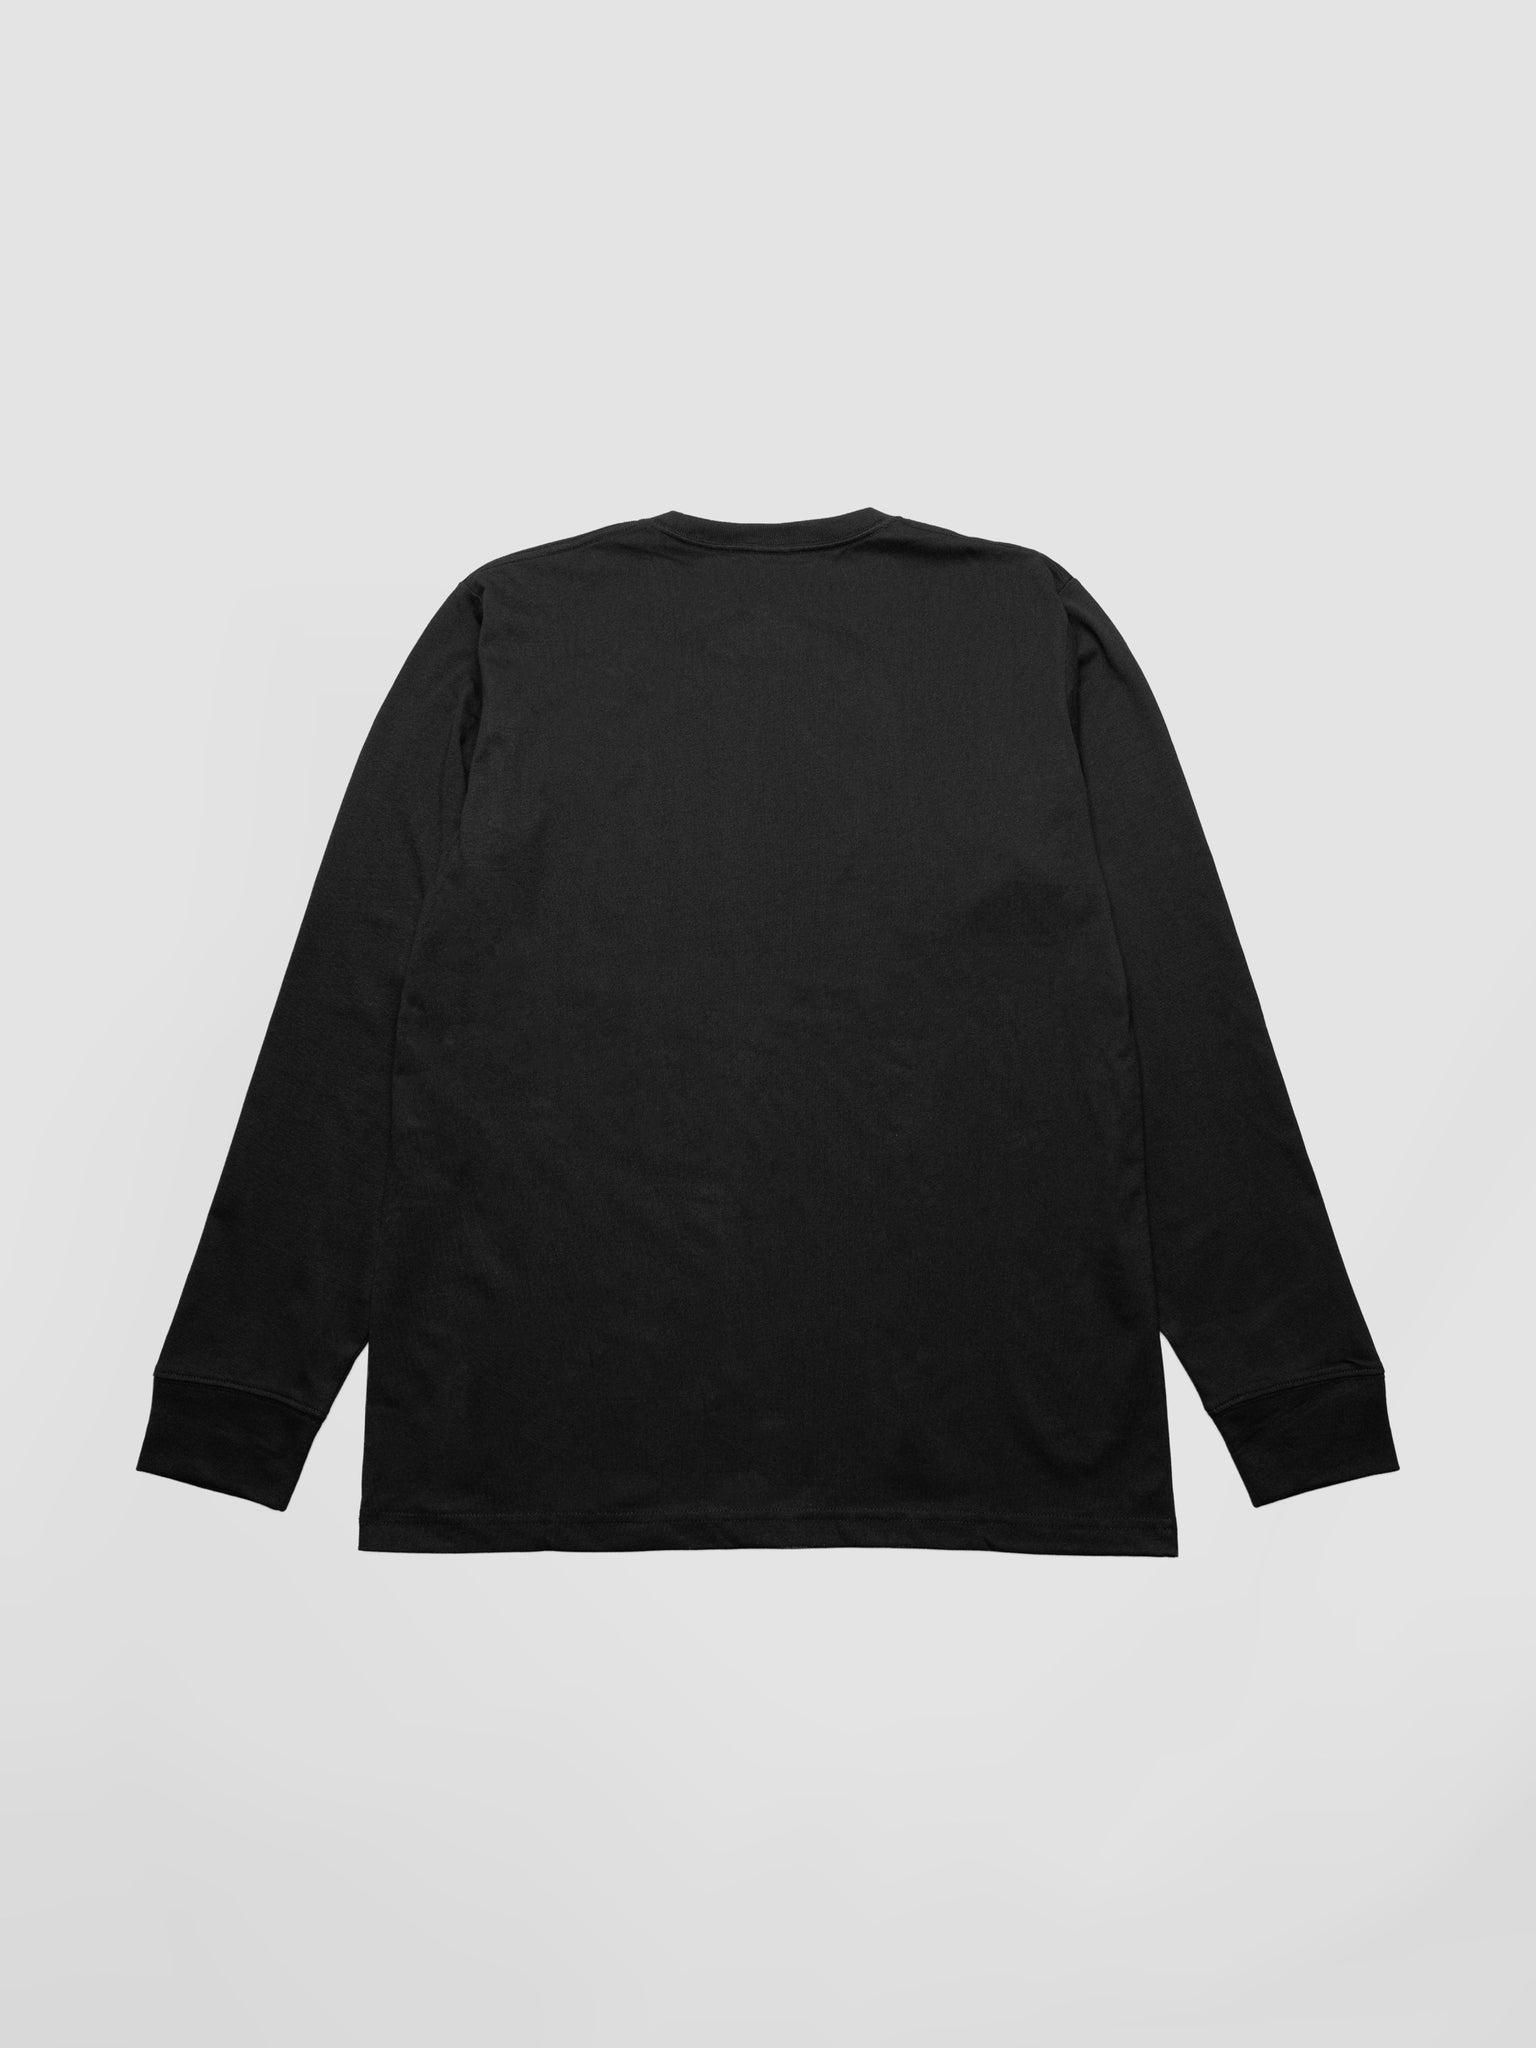 BLANK - Standard Fit Long Sleeve Black - v2